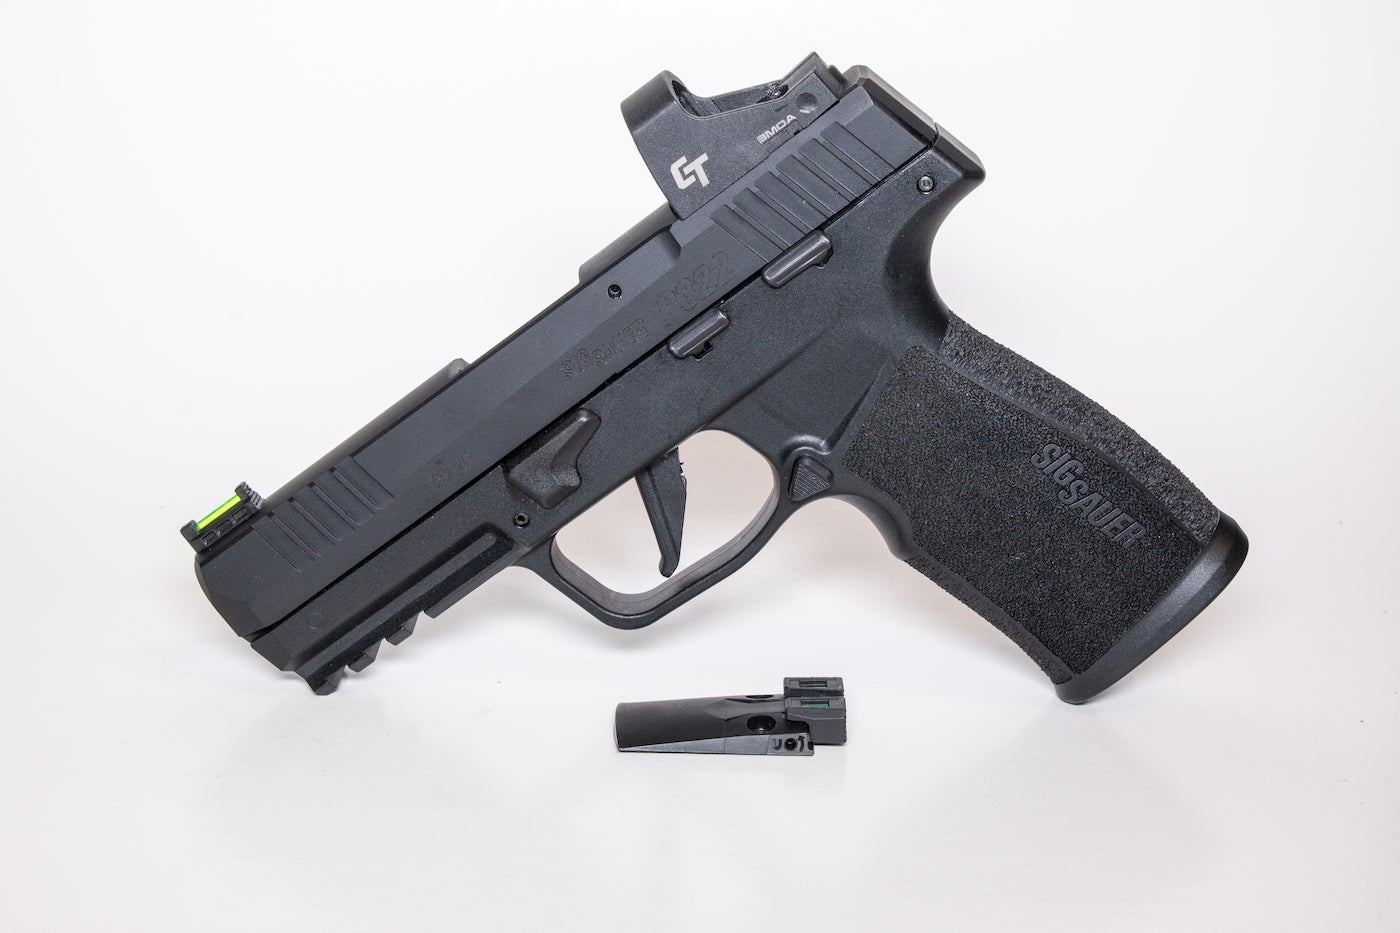 Sig Sauer P322 pistol with a mini reflex sight.